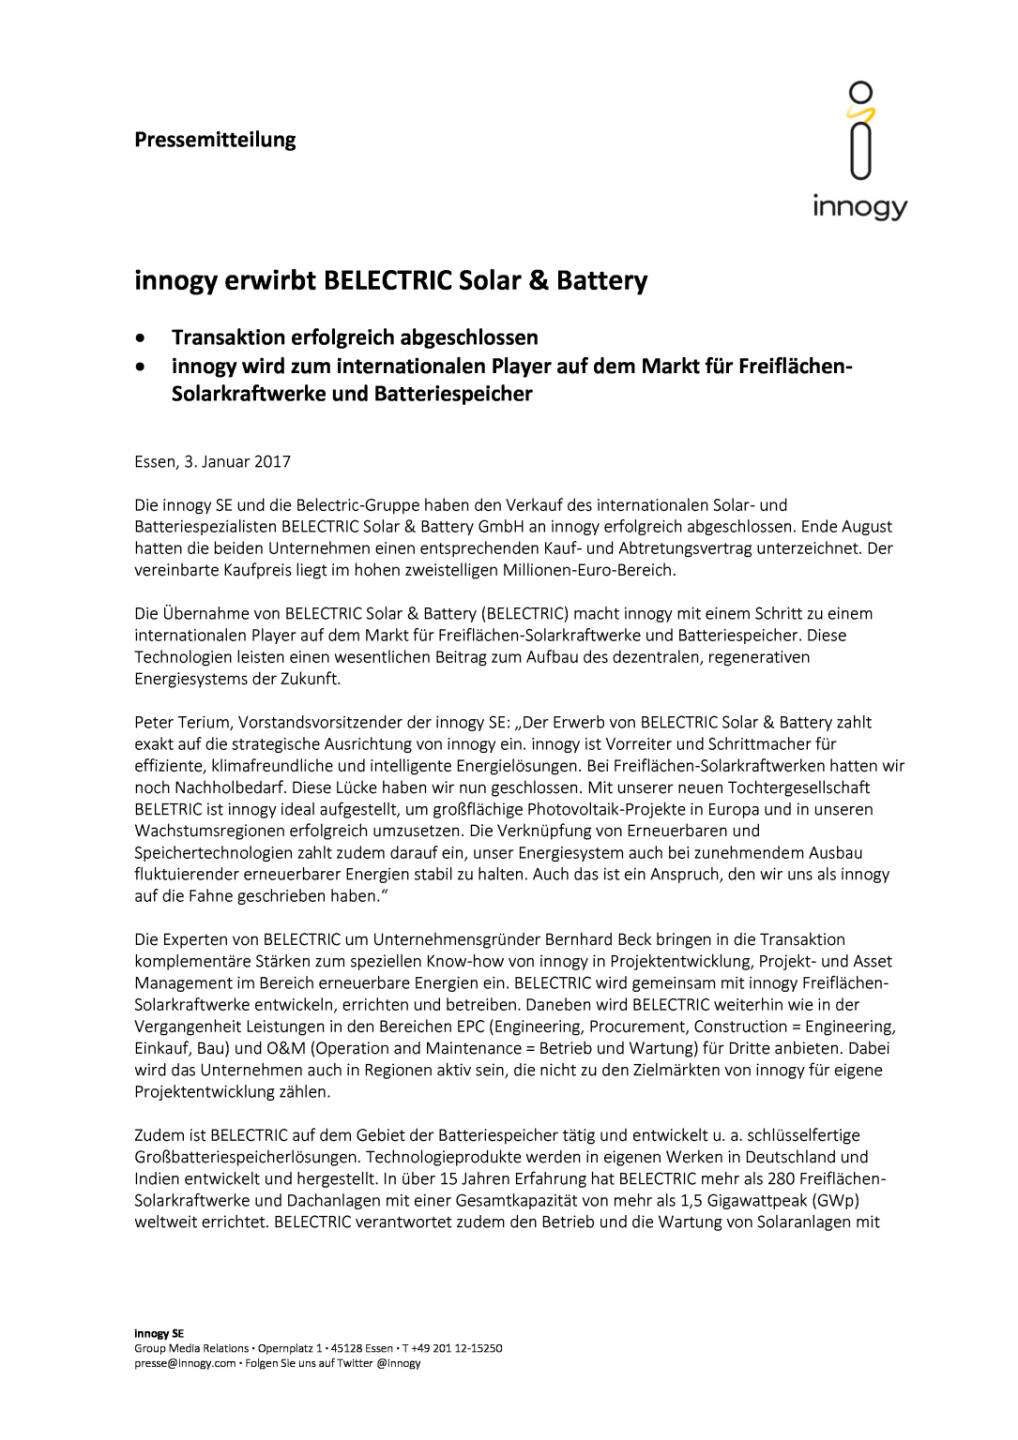 innogy erwirbt Belectric Solar & Battery, Seite 1/2, komplettes Dokument unter http://boerse-social.com/static/uploads/file_2044_innogy_erwirbt_belectric_solar_battery.pdf